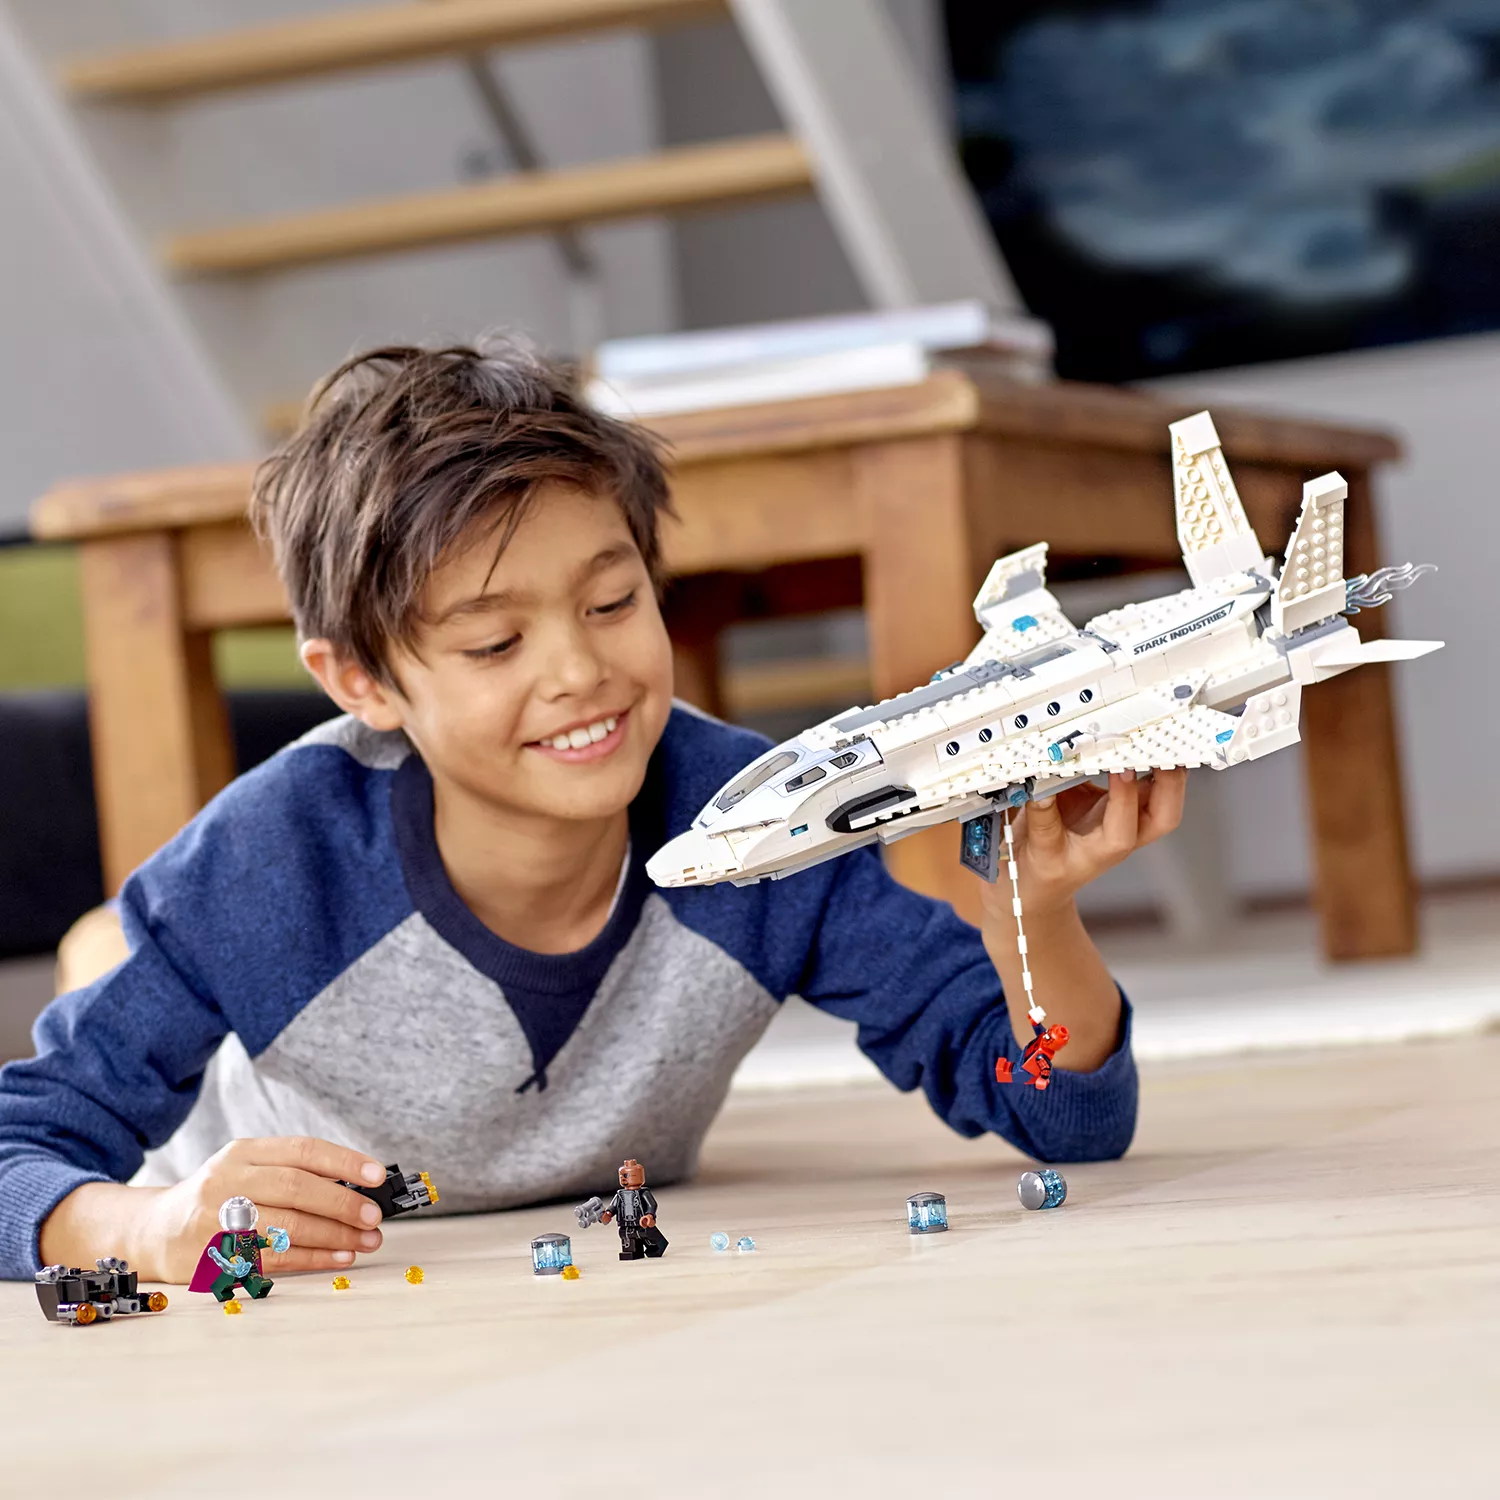 LEGO Marvel Super Heroes Starks Jet und der Drohnenangriff - 76130